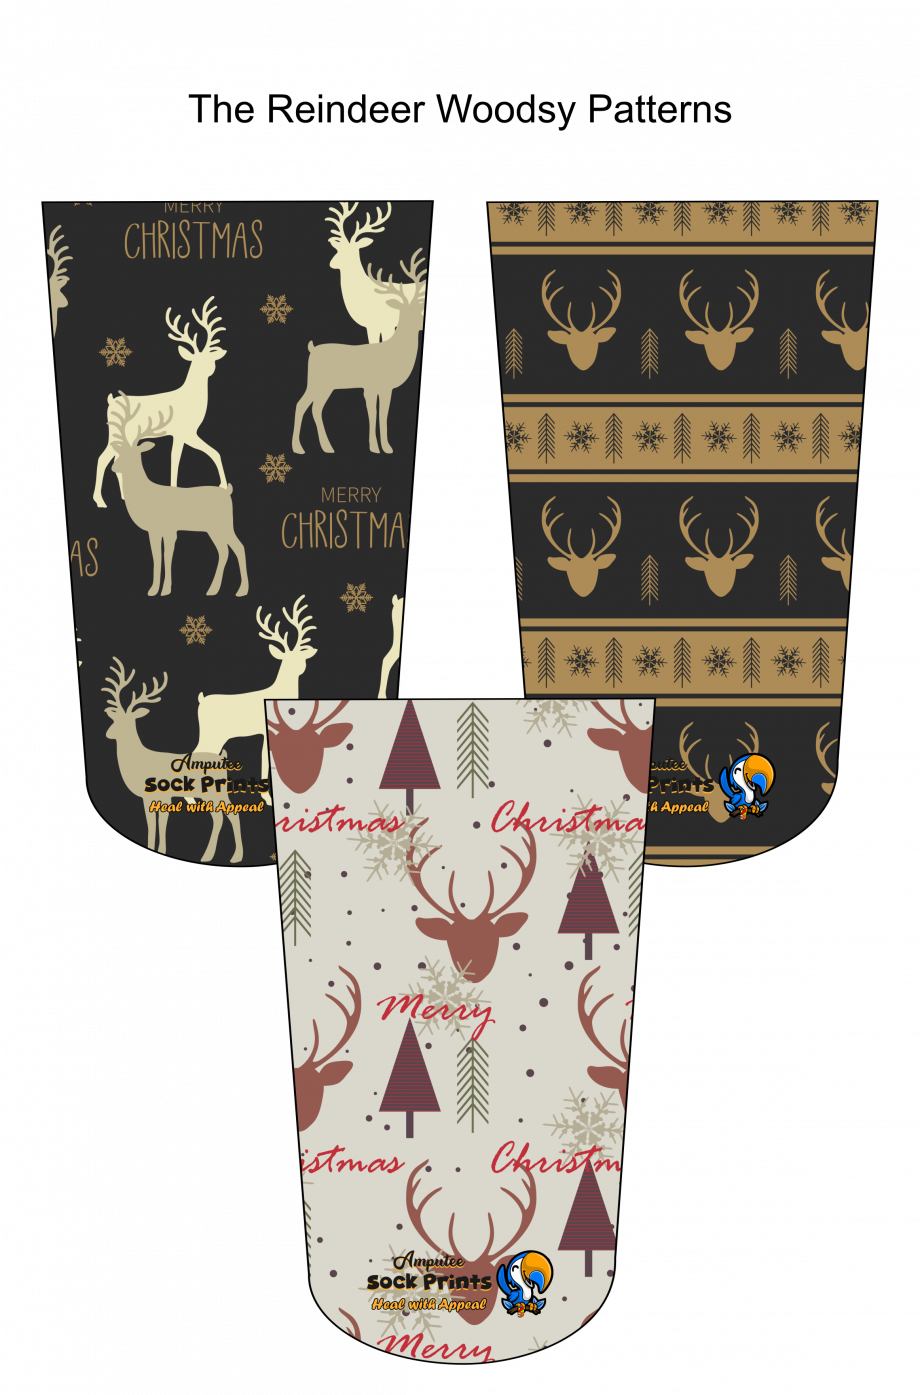 The reindeer woodsy patterns